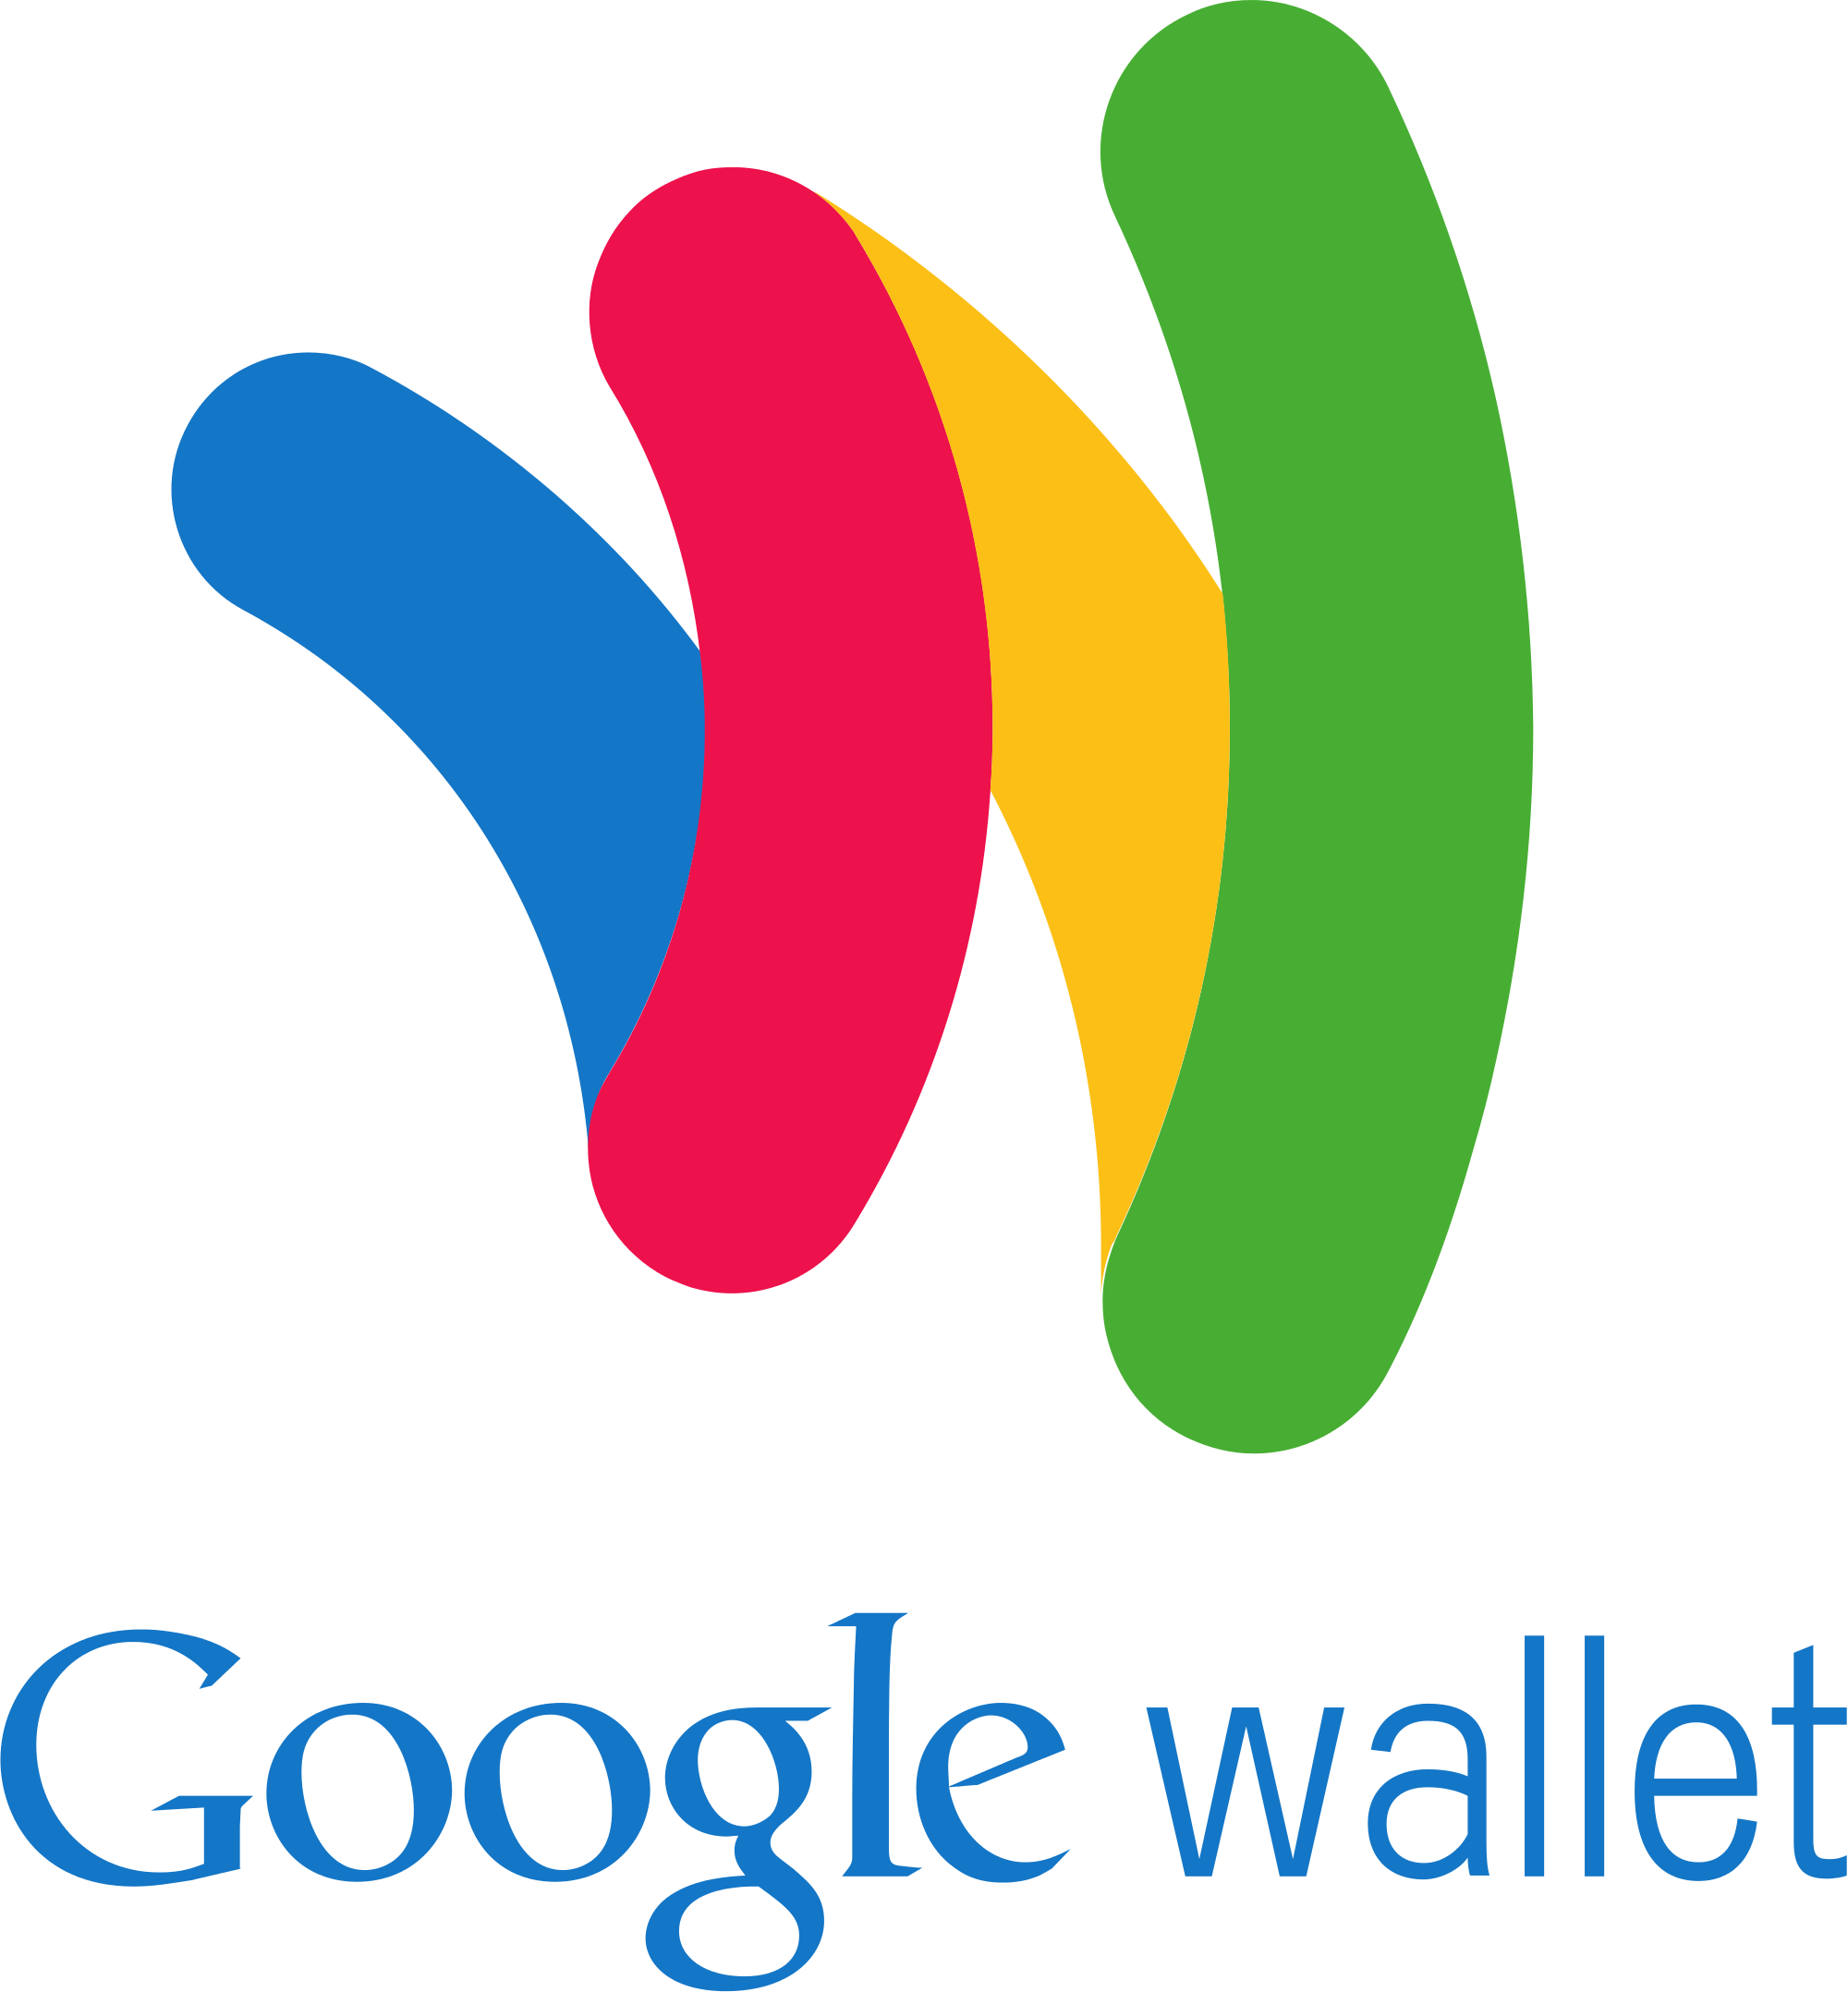 Updated Google Logo - File:Google Wallet logo.svg - Wikimedia Commons